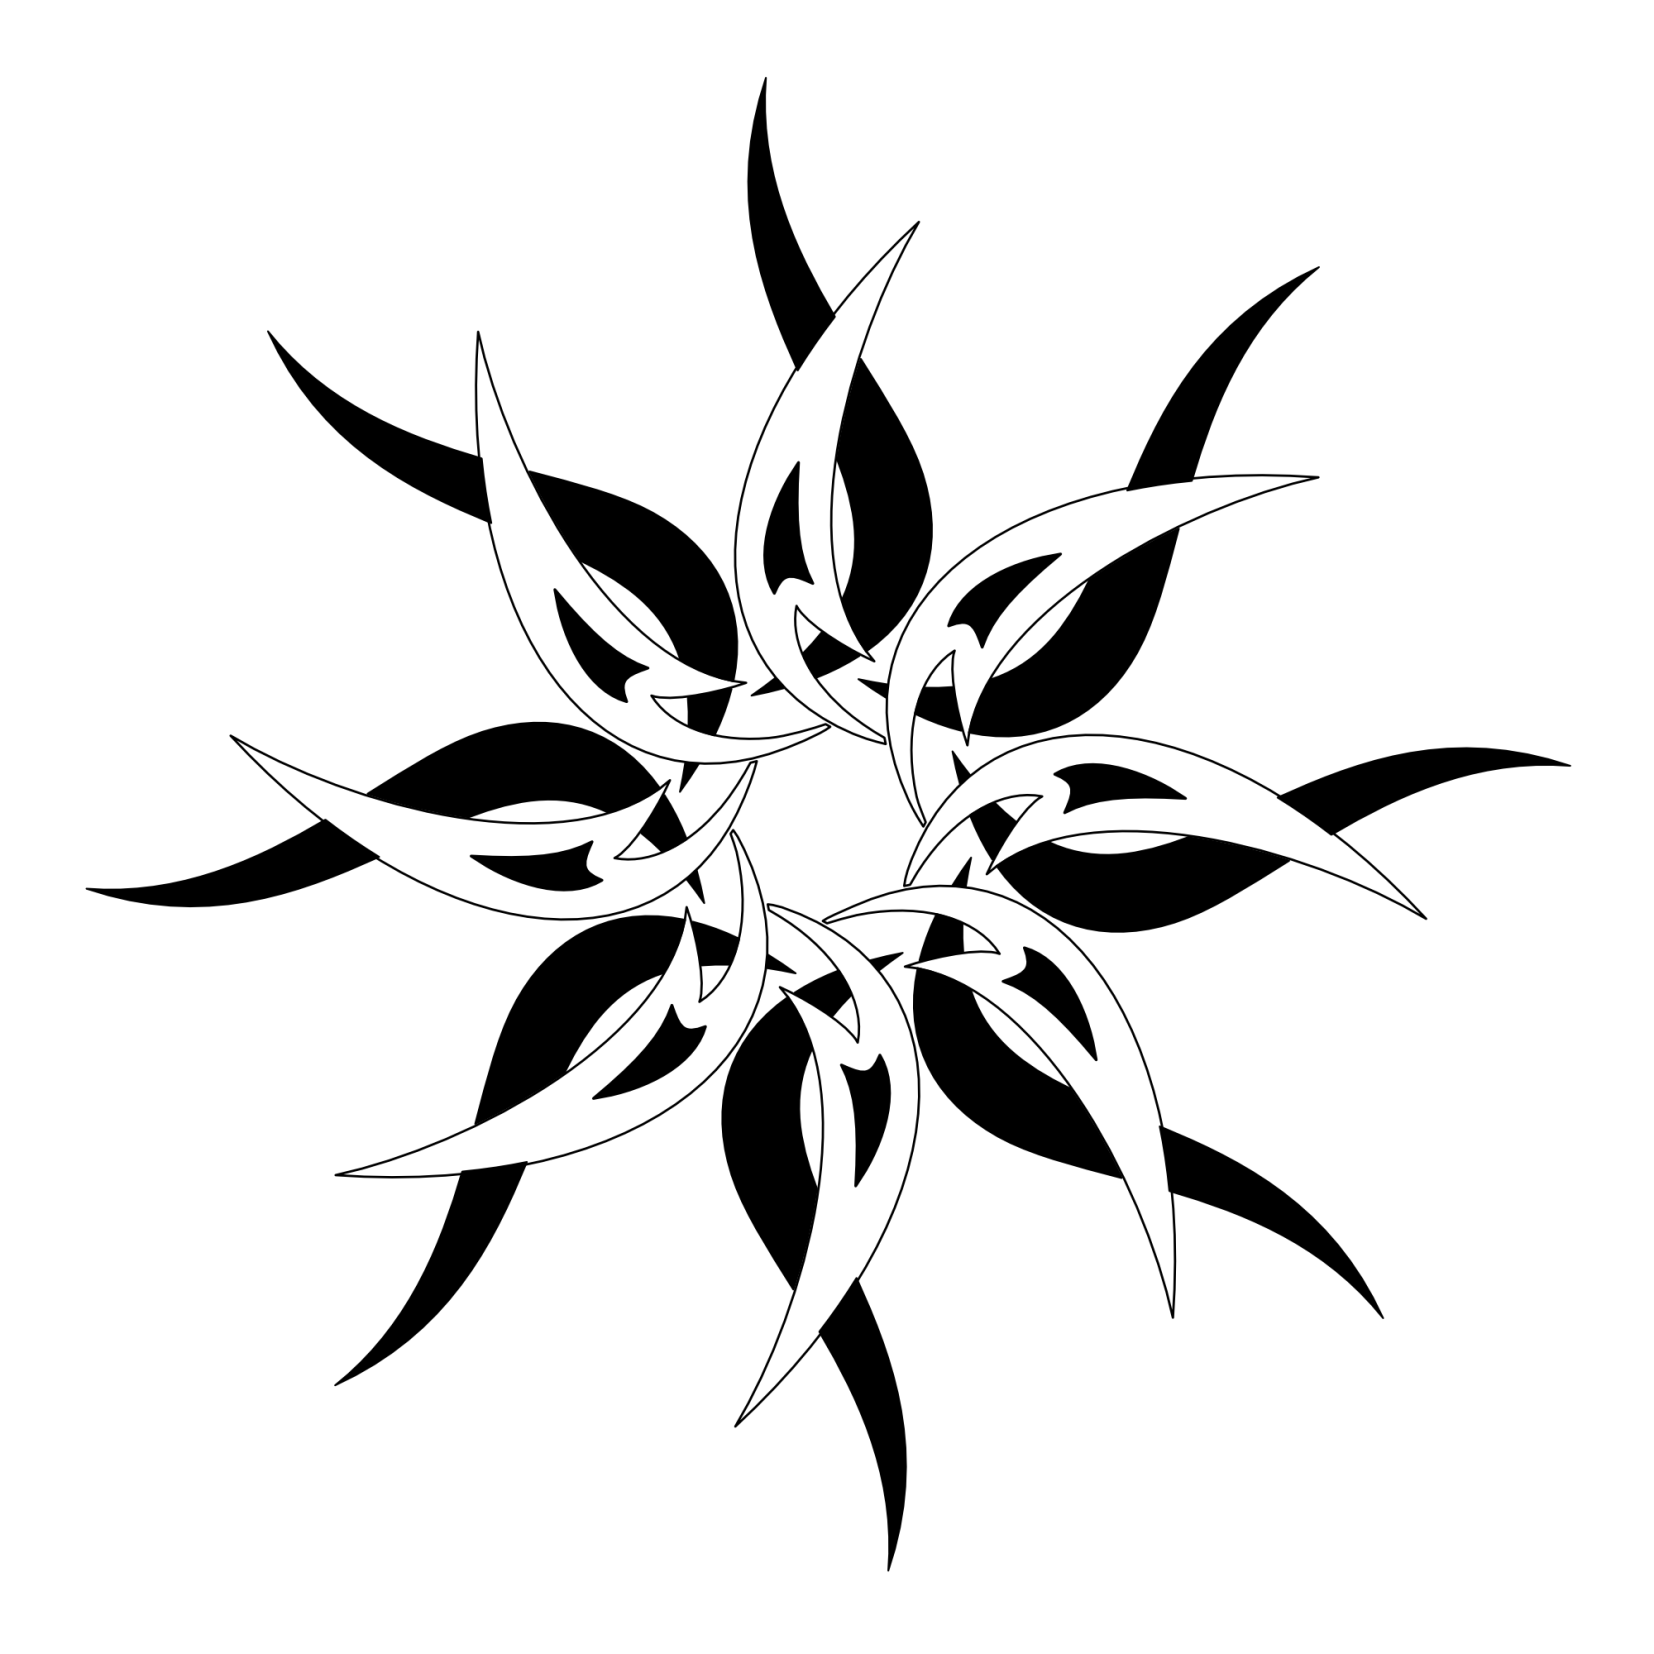 Black & white tribal sun tattoo design